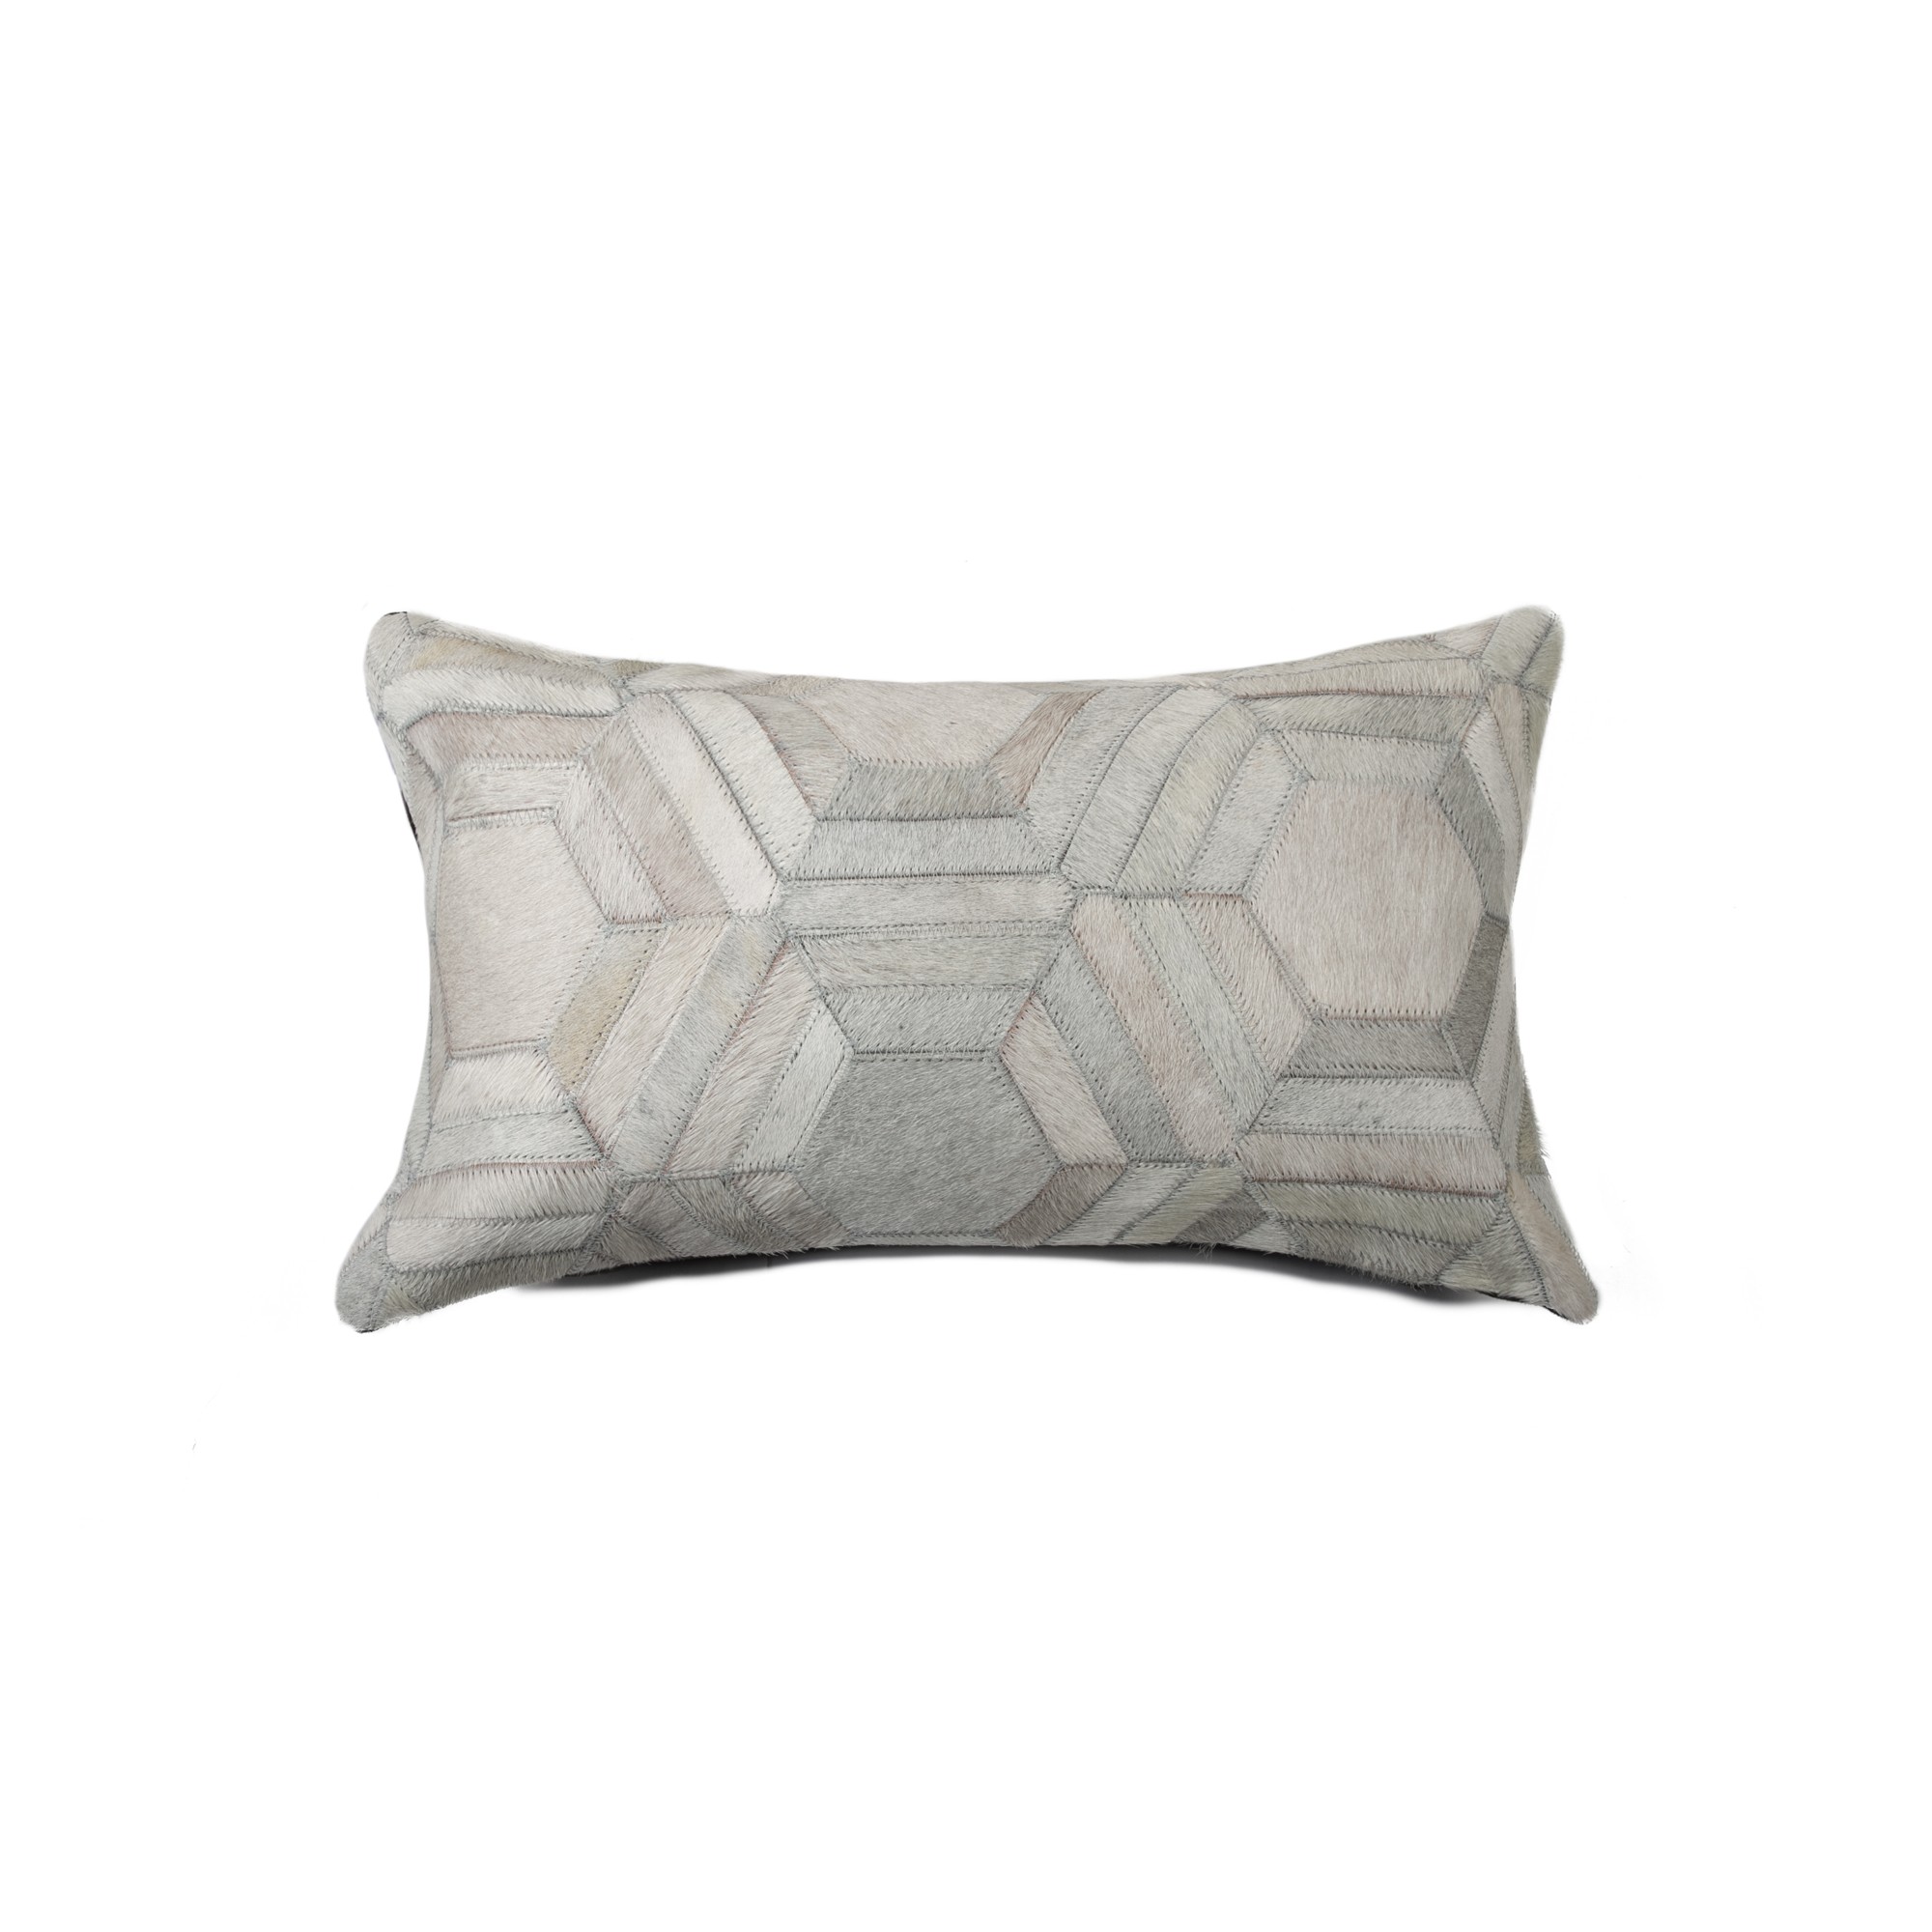 12" x 20" x 5" Gray Cowhide Hexagon - Pillow